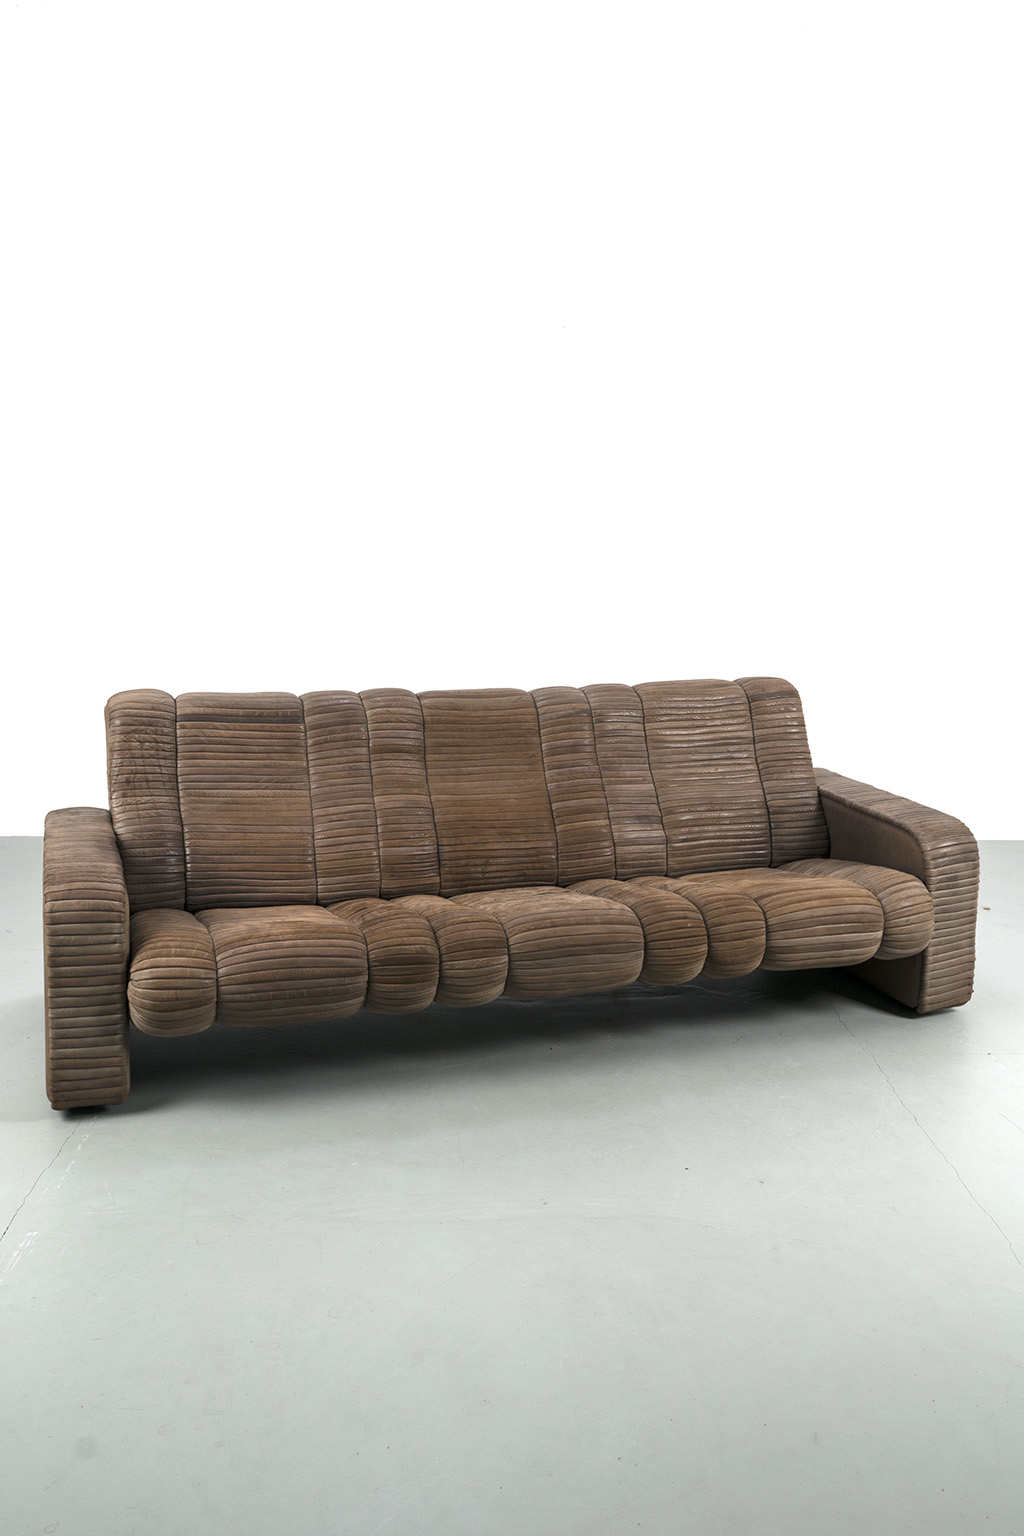 Very rare, Ernst Lüthy leather sofa